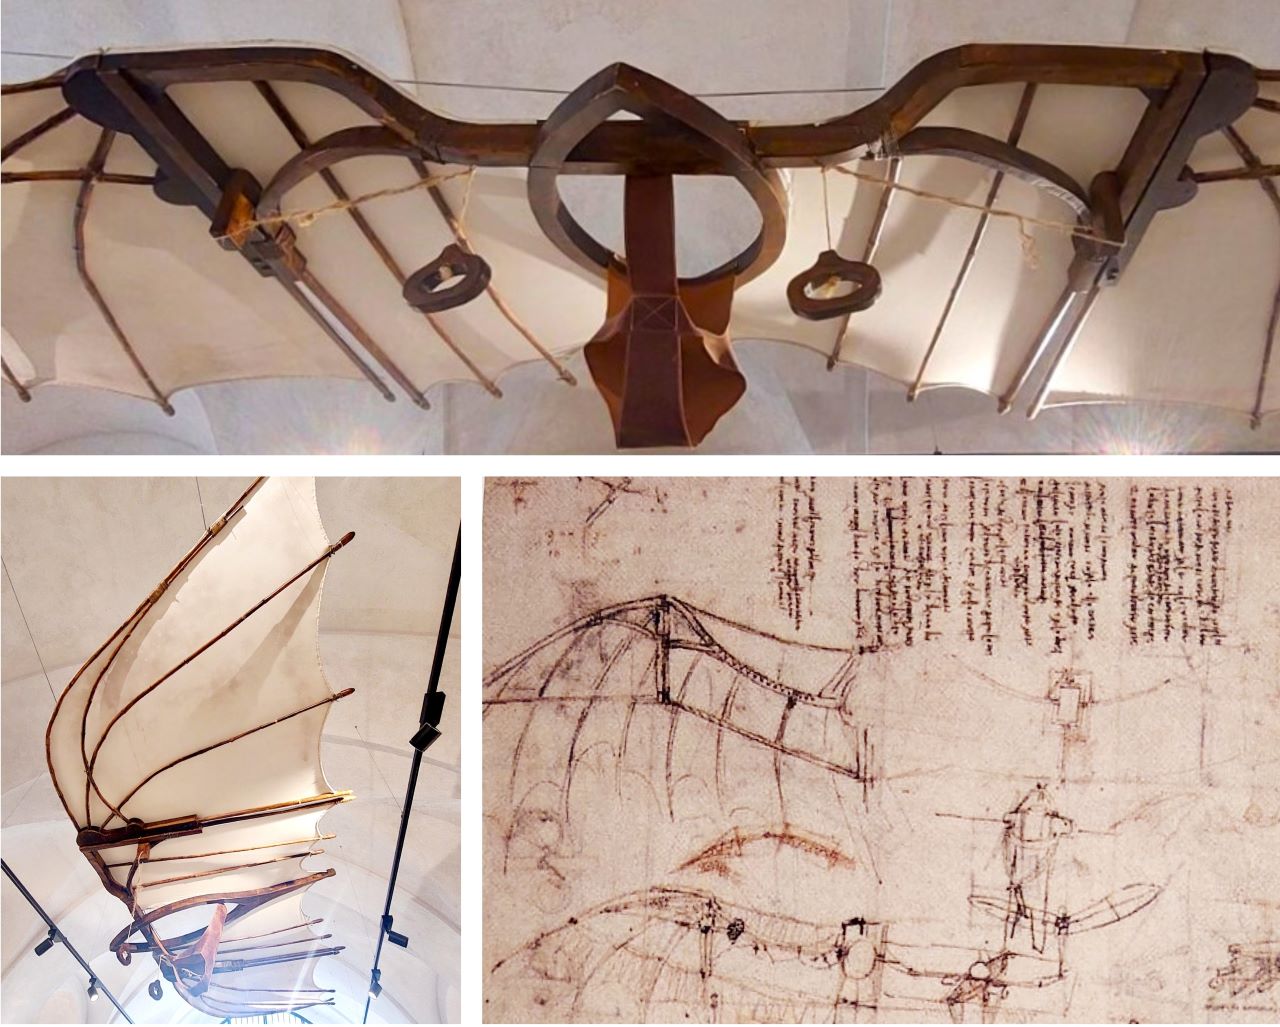 Hang Glider by Da Vinci